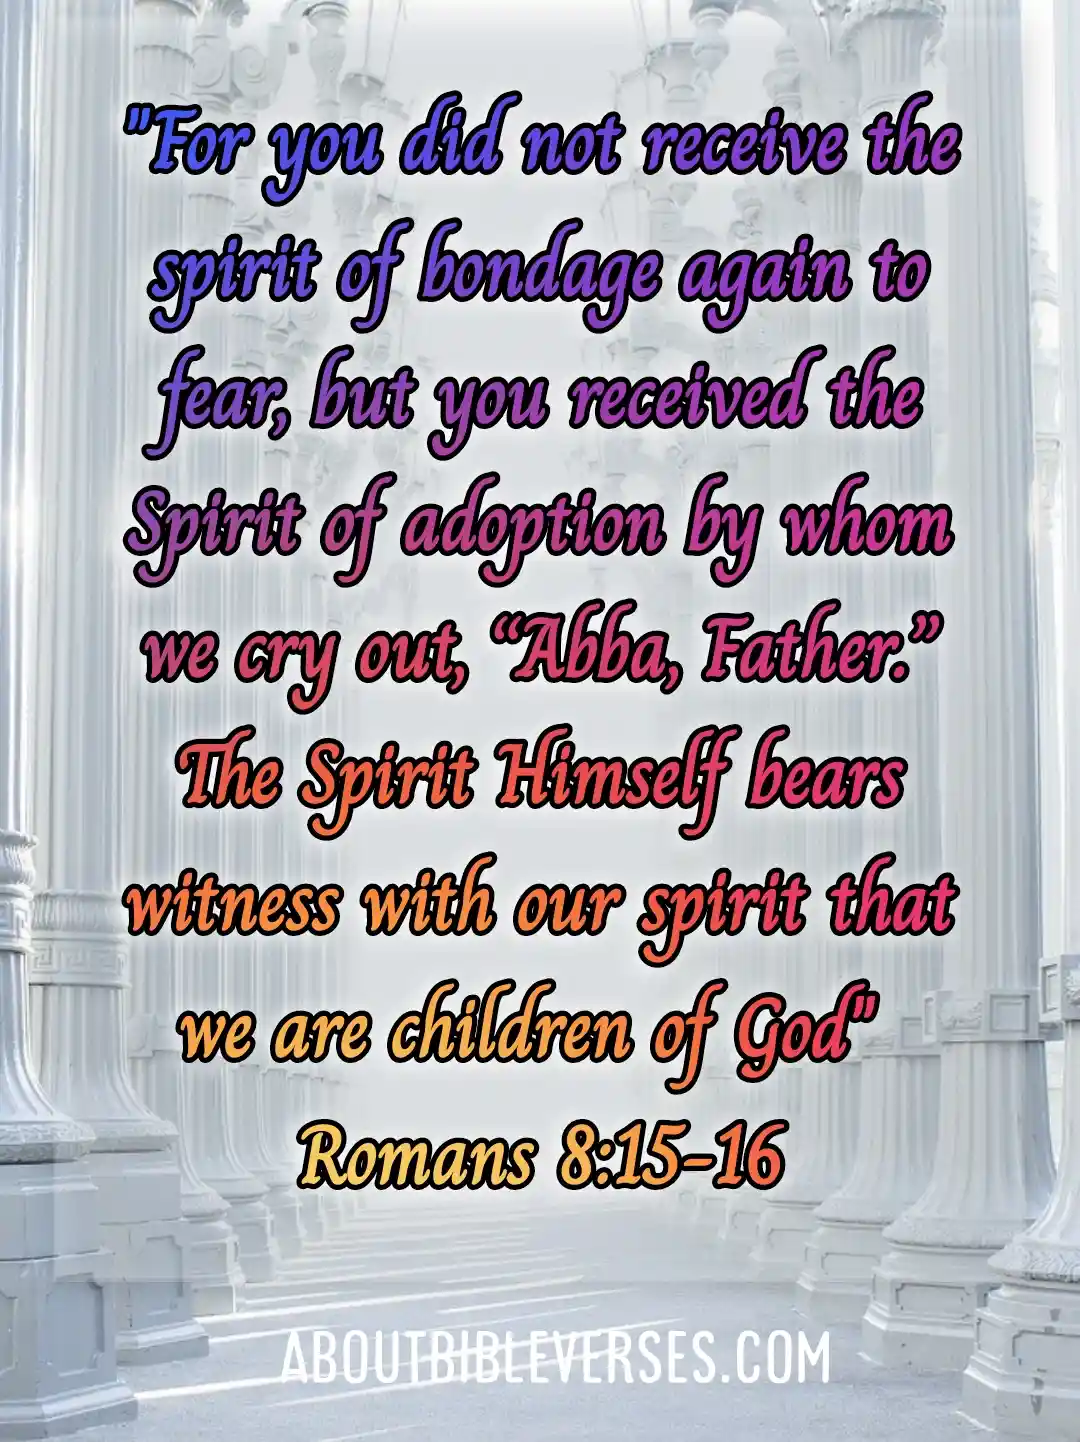 Today bible verse (Romans 8:15-16)